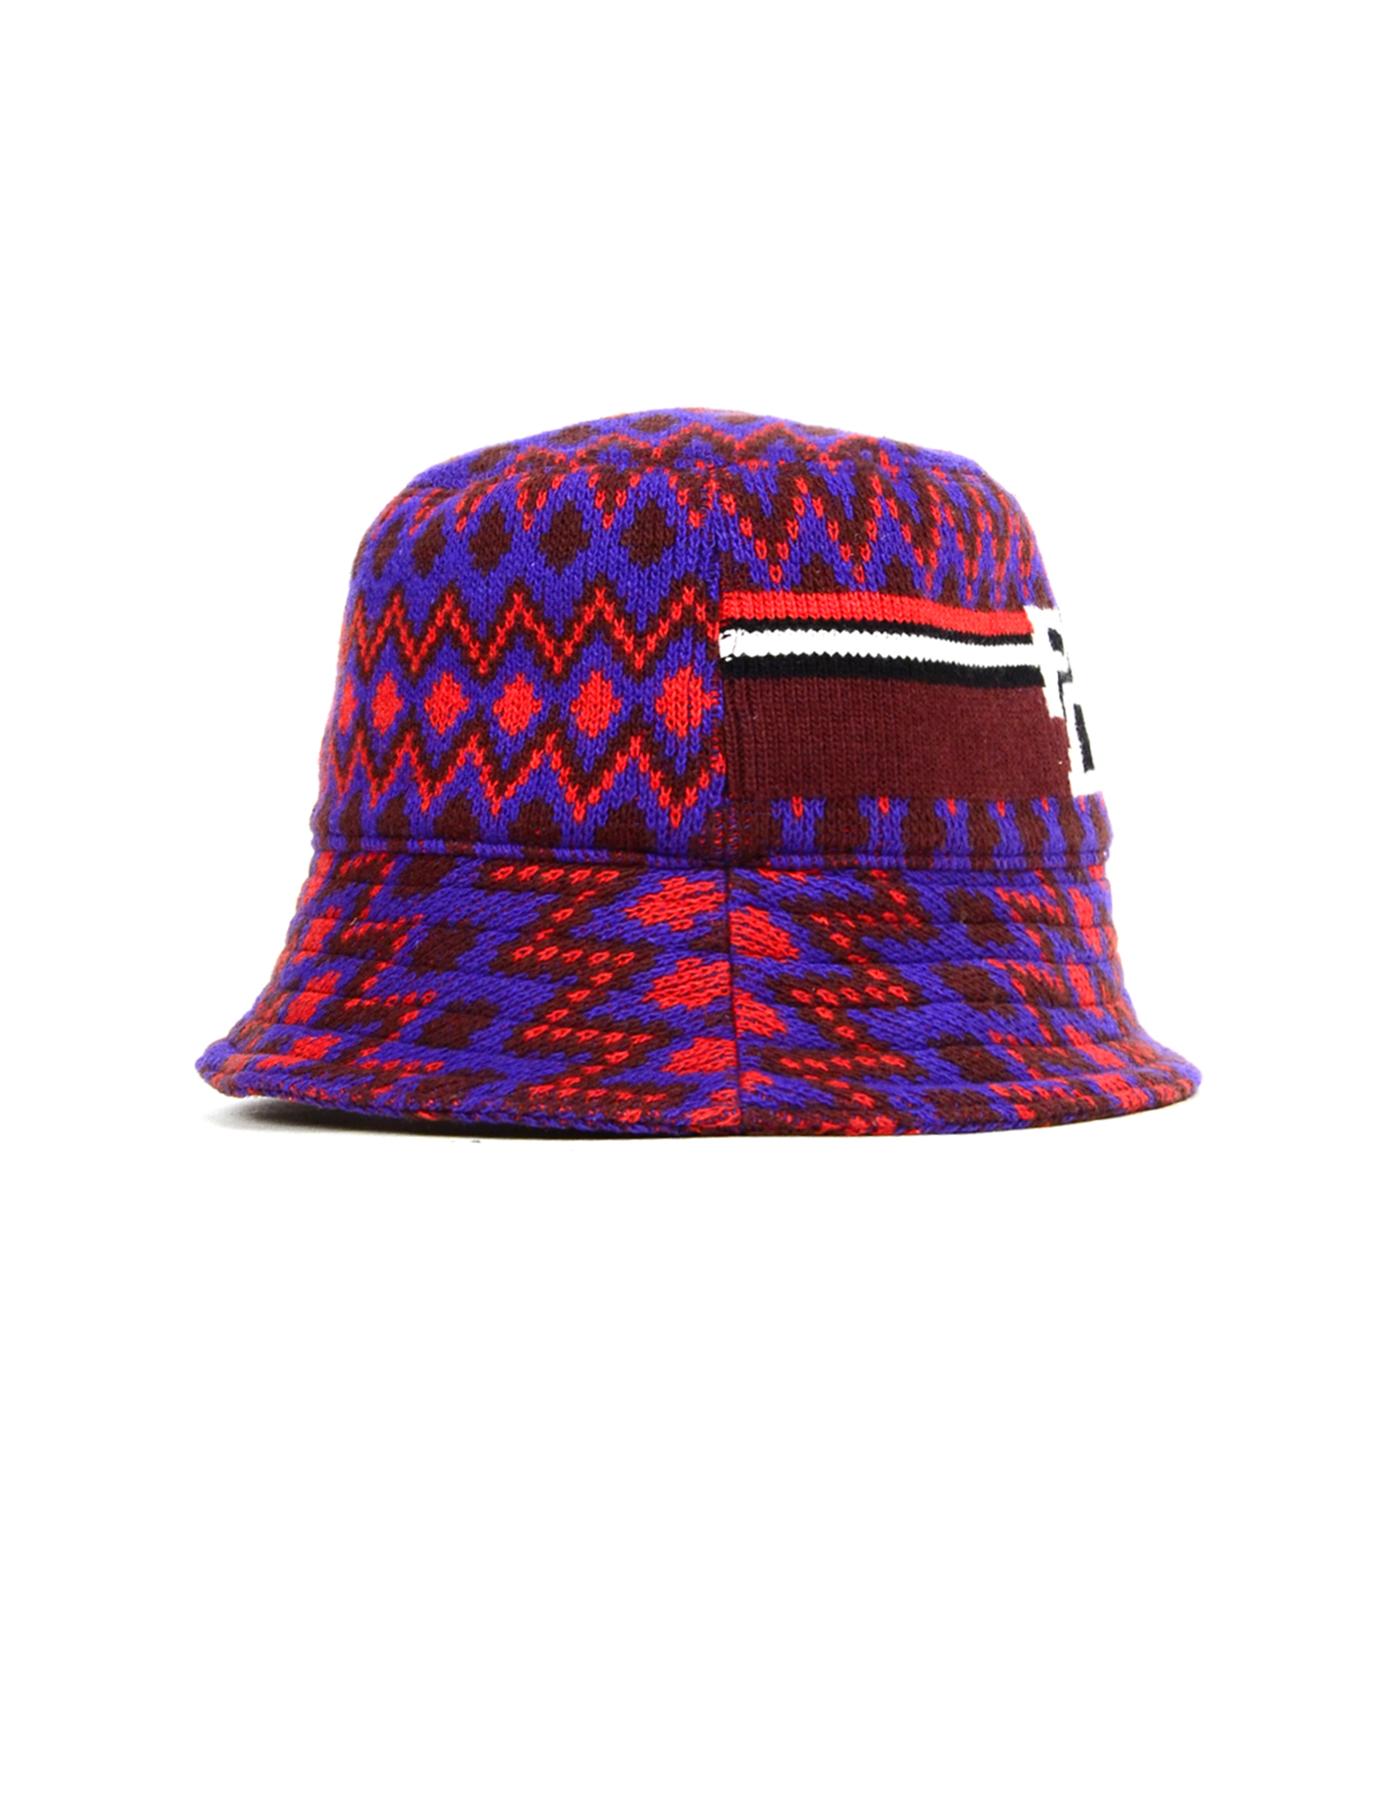 red prada hat